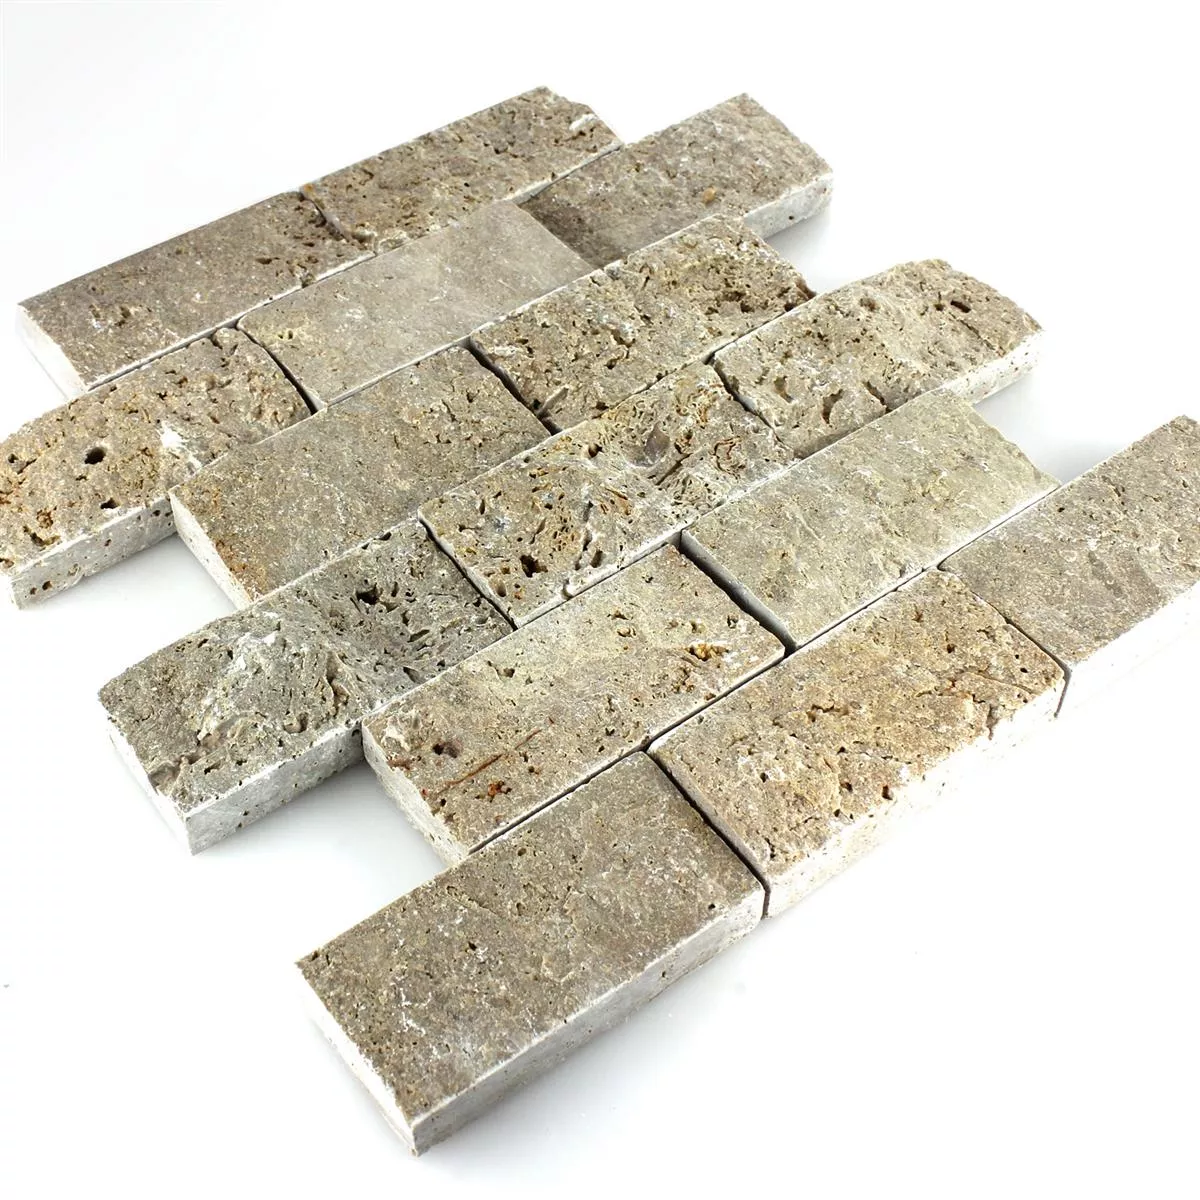 Sample Mosaic Tiles Travertine 3D Noce Brick